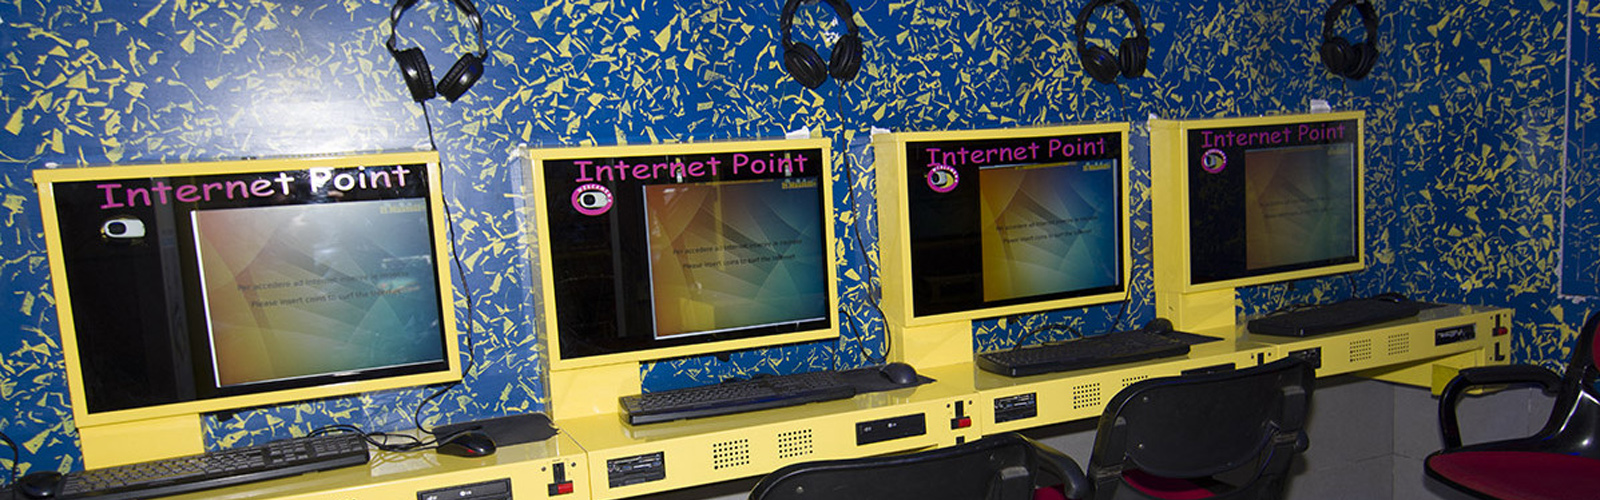 Internet point Roma